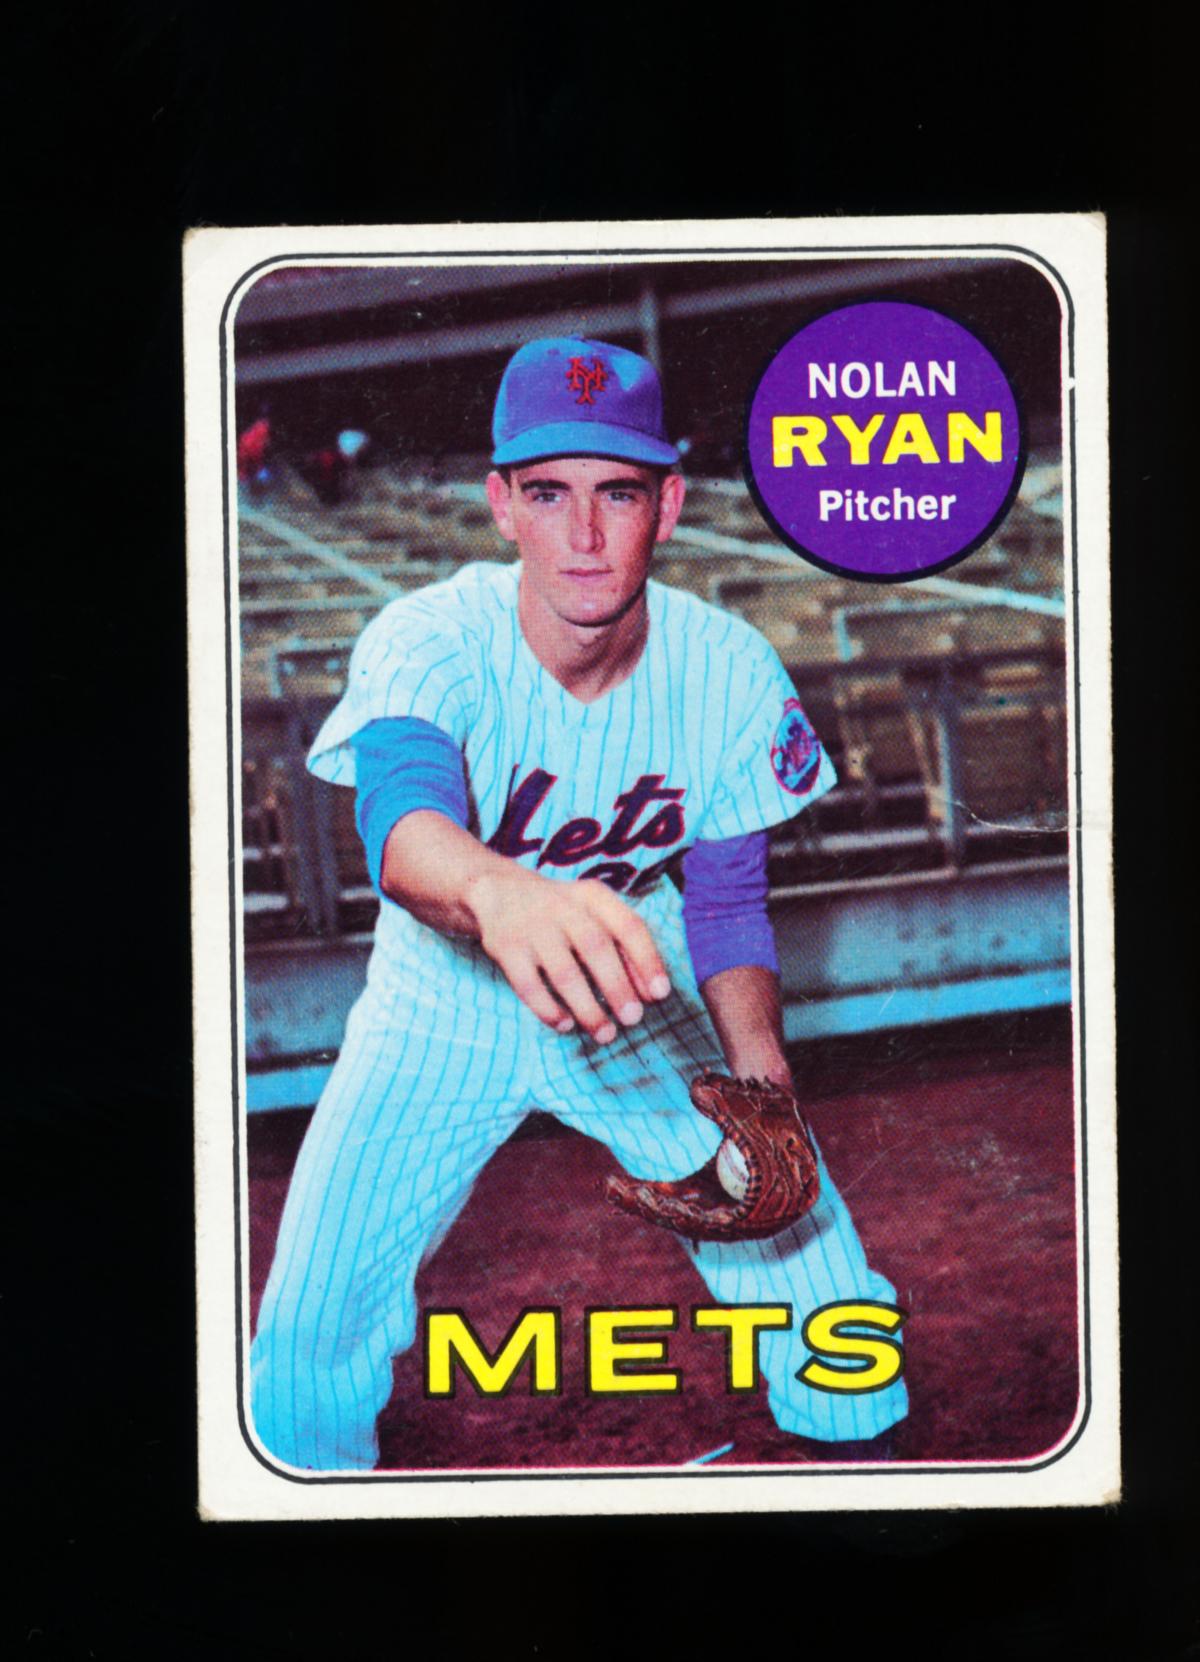 1969 Topps Baseball Card #533 Hall of Famer Nolan Ryan New York Mets. (2nd